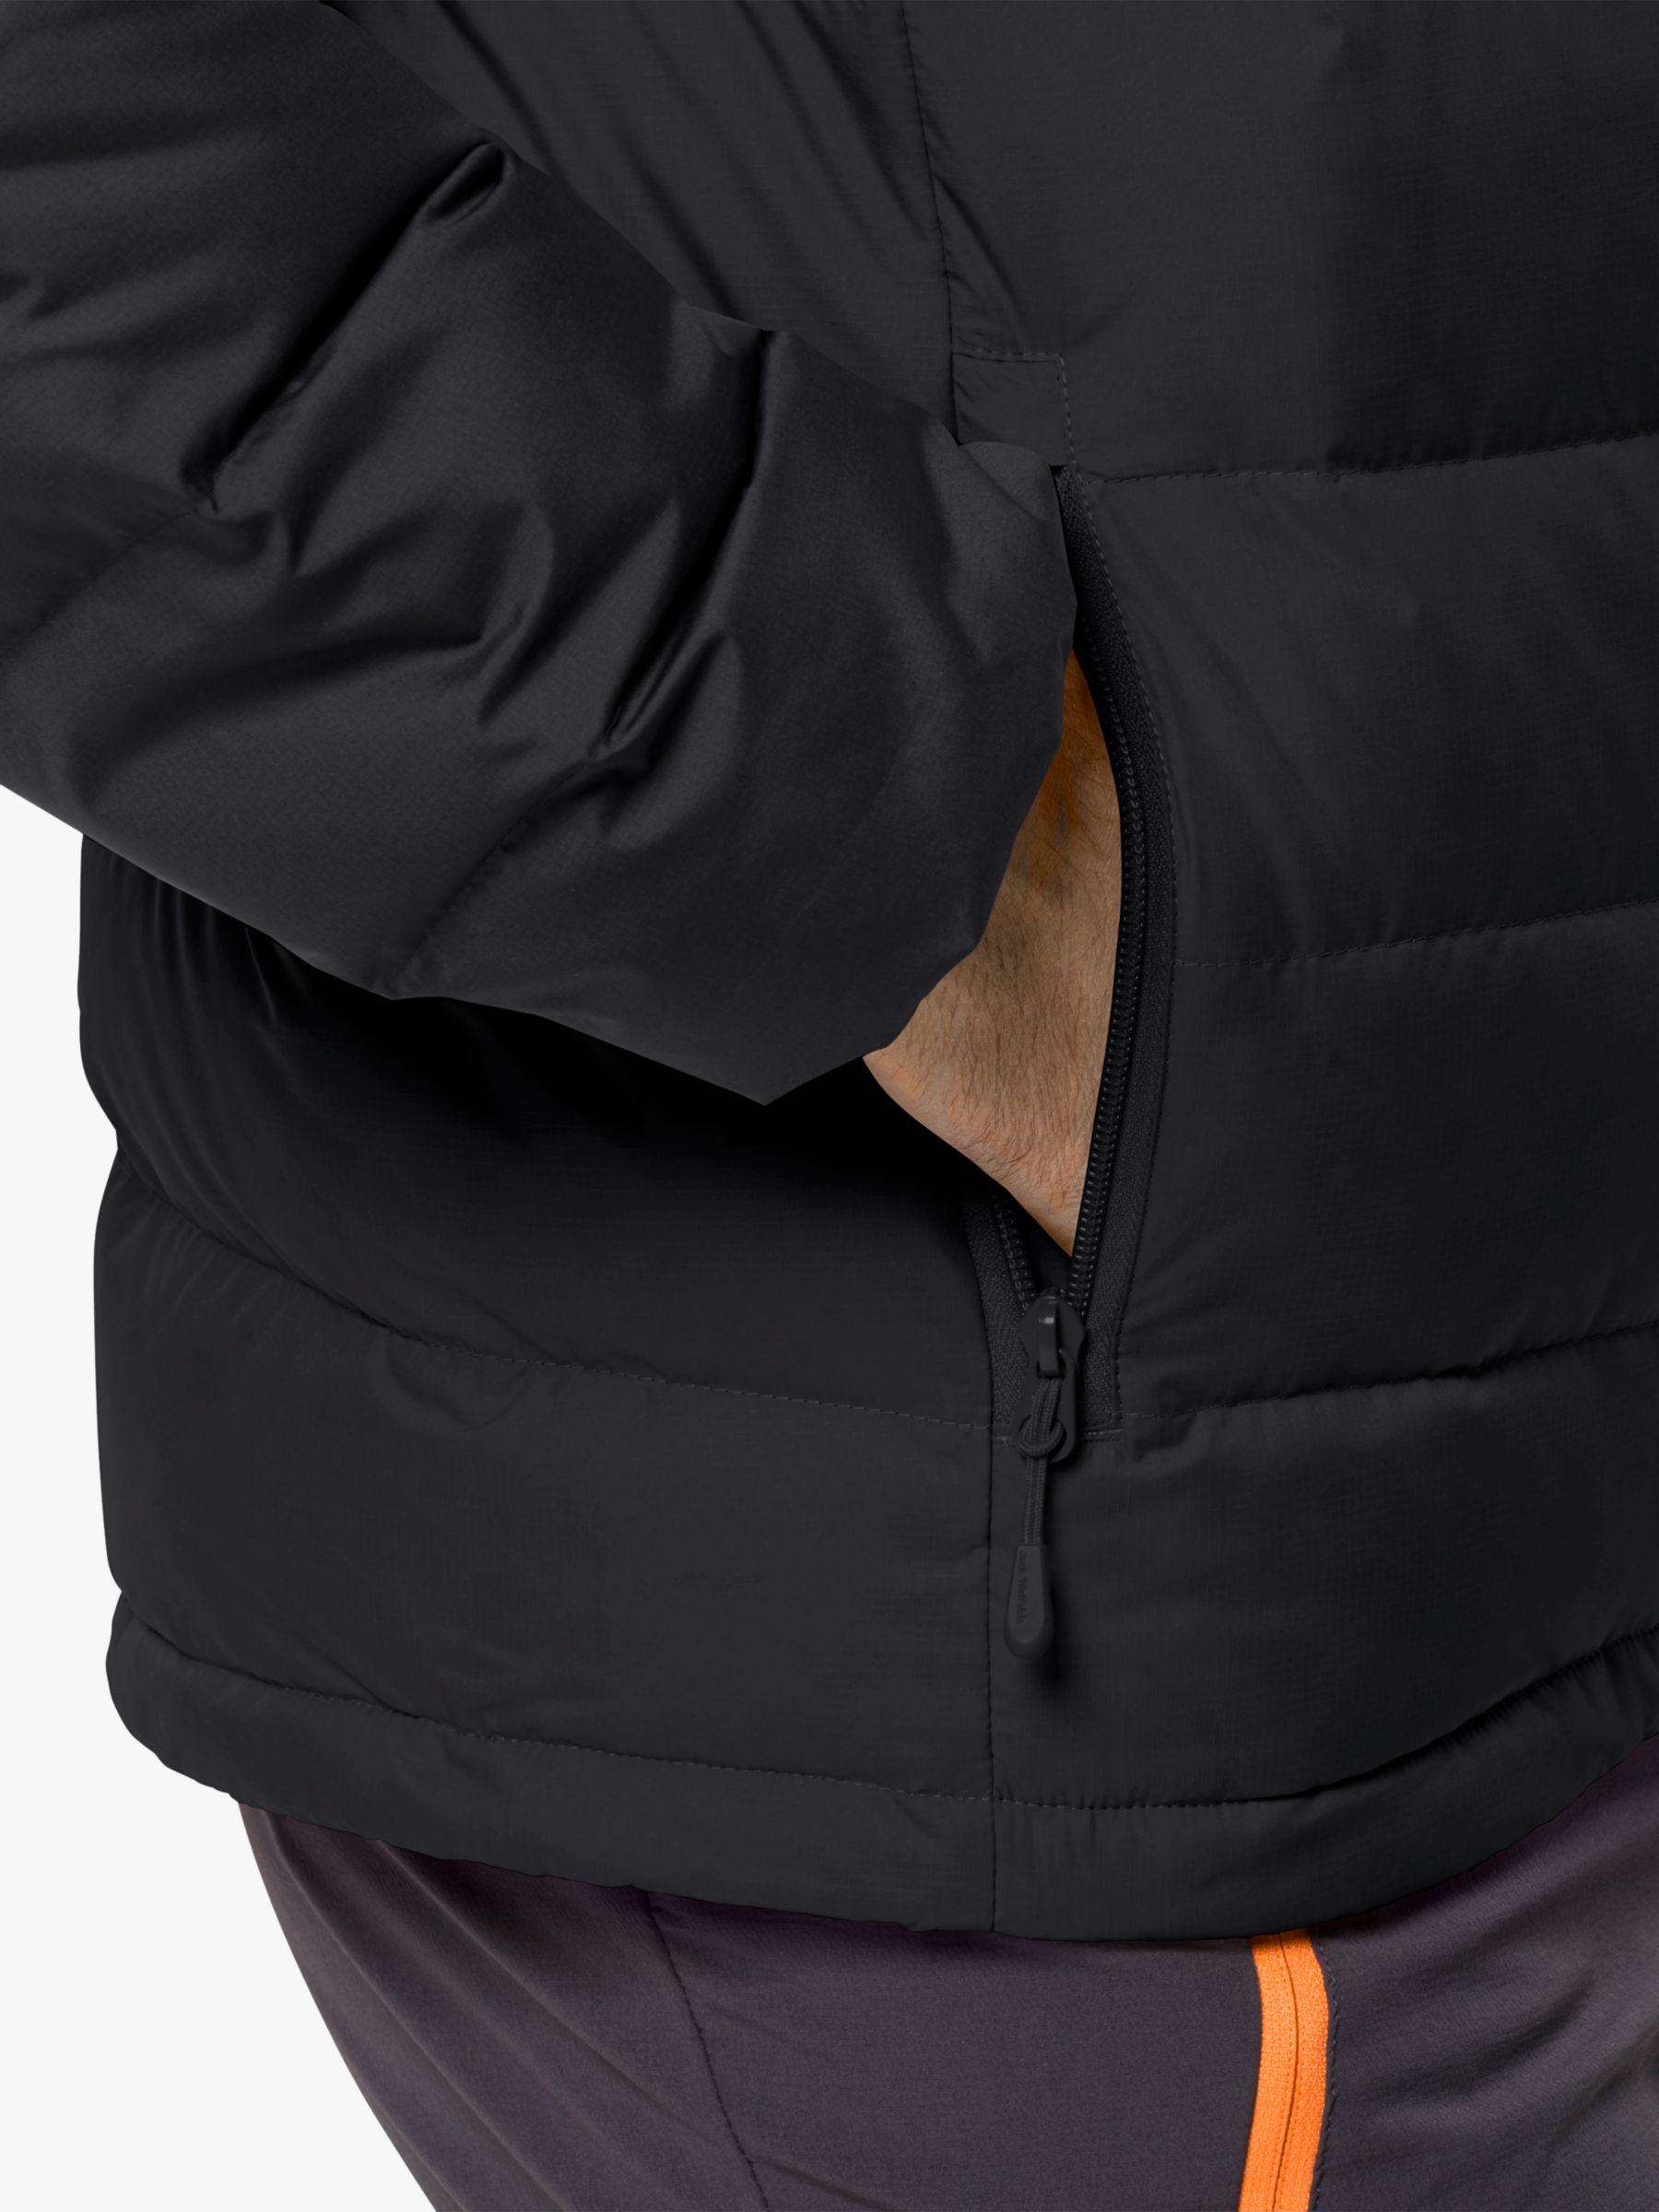 Jack Wolfskin Ather Down Men's Hooded Jacket, Black, XL